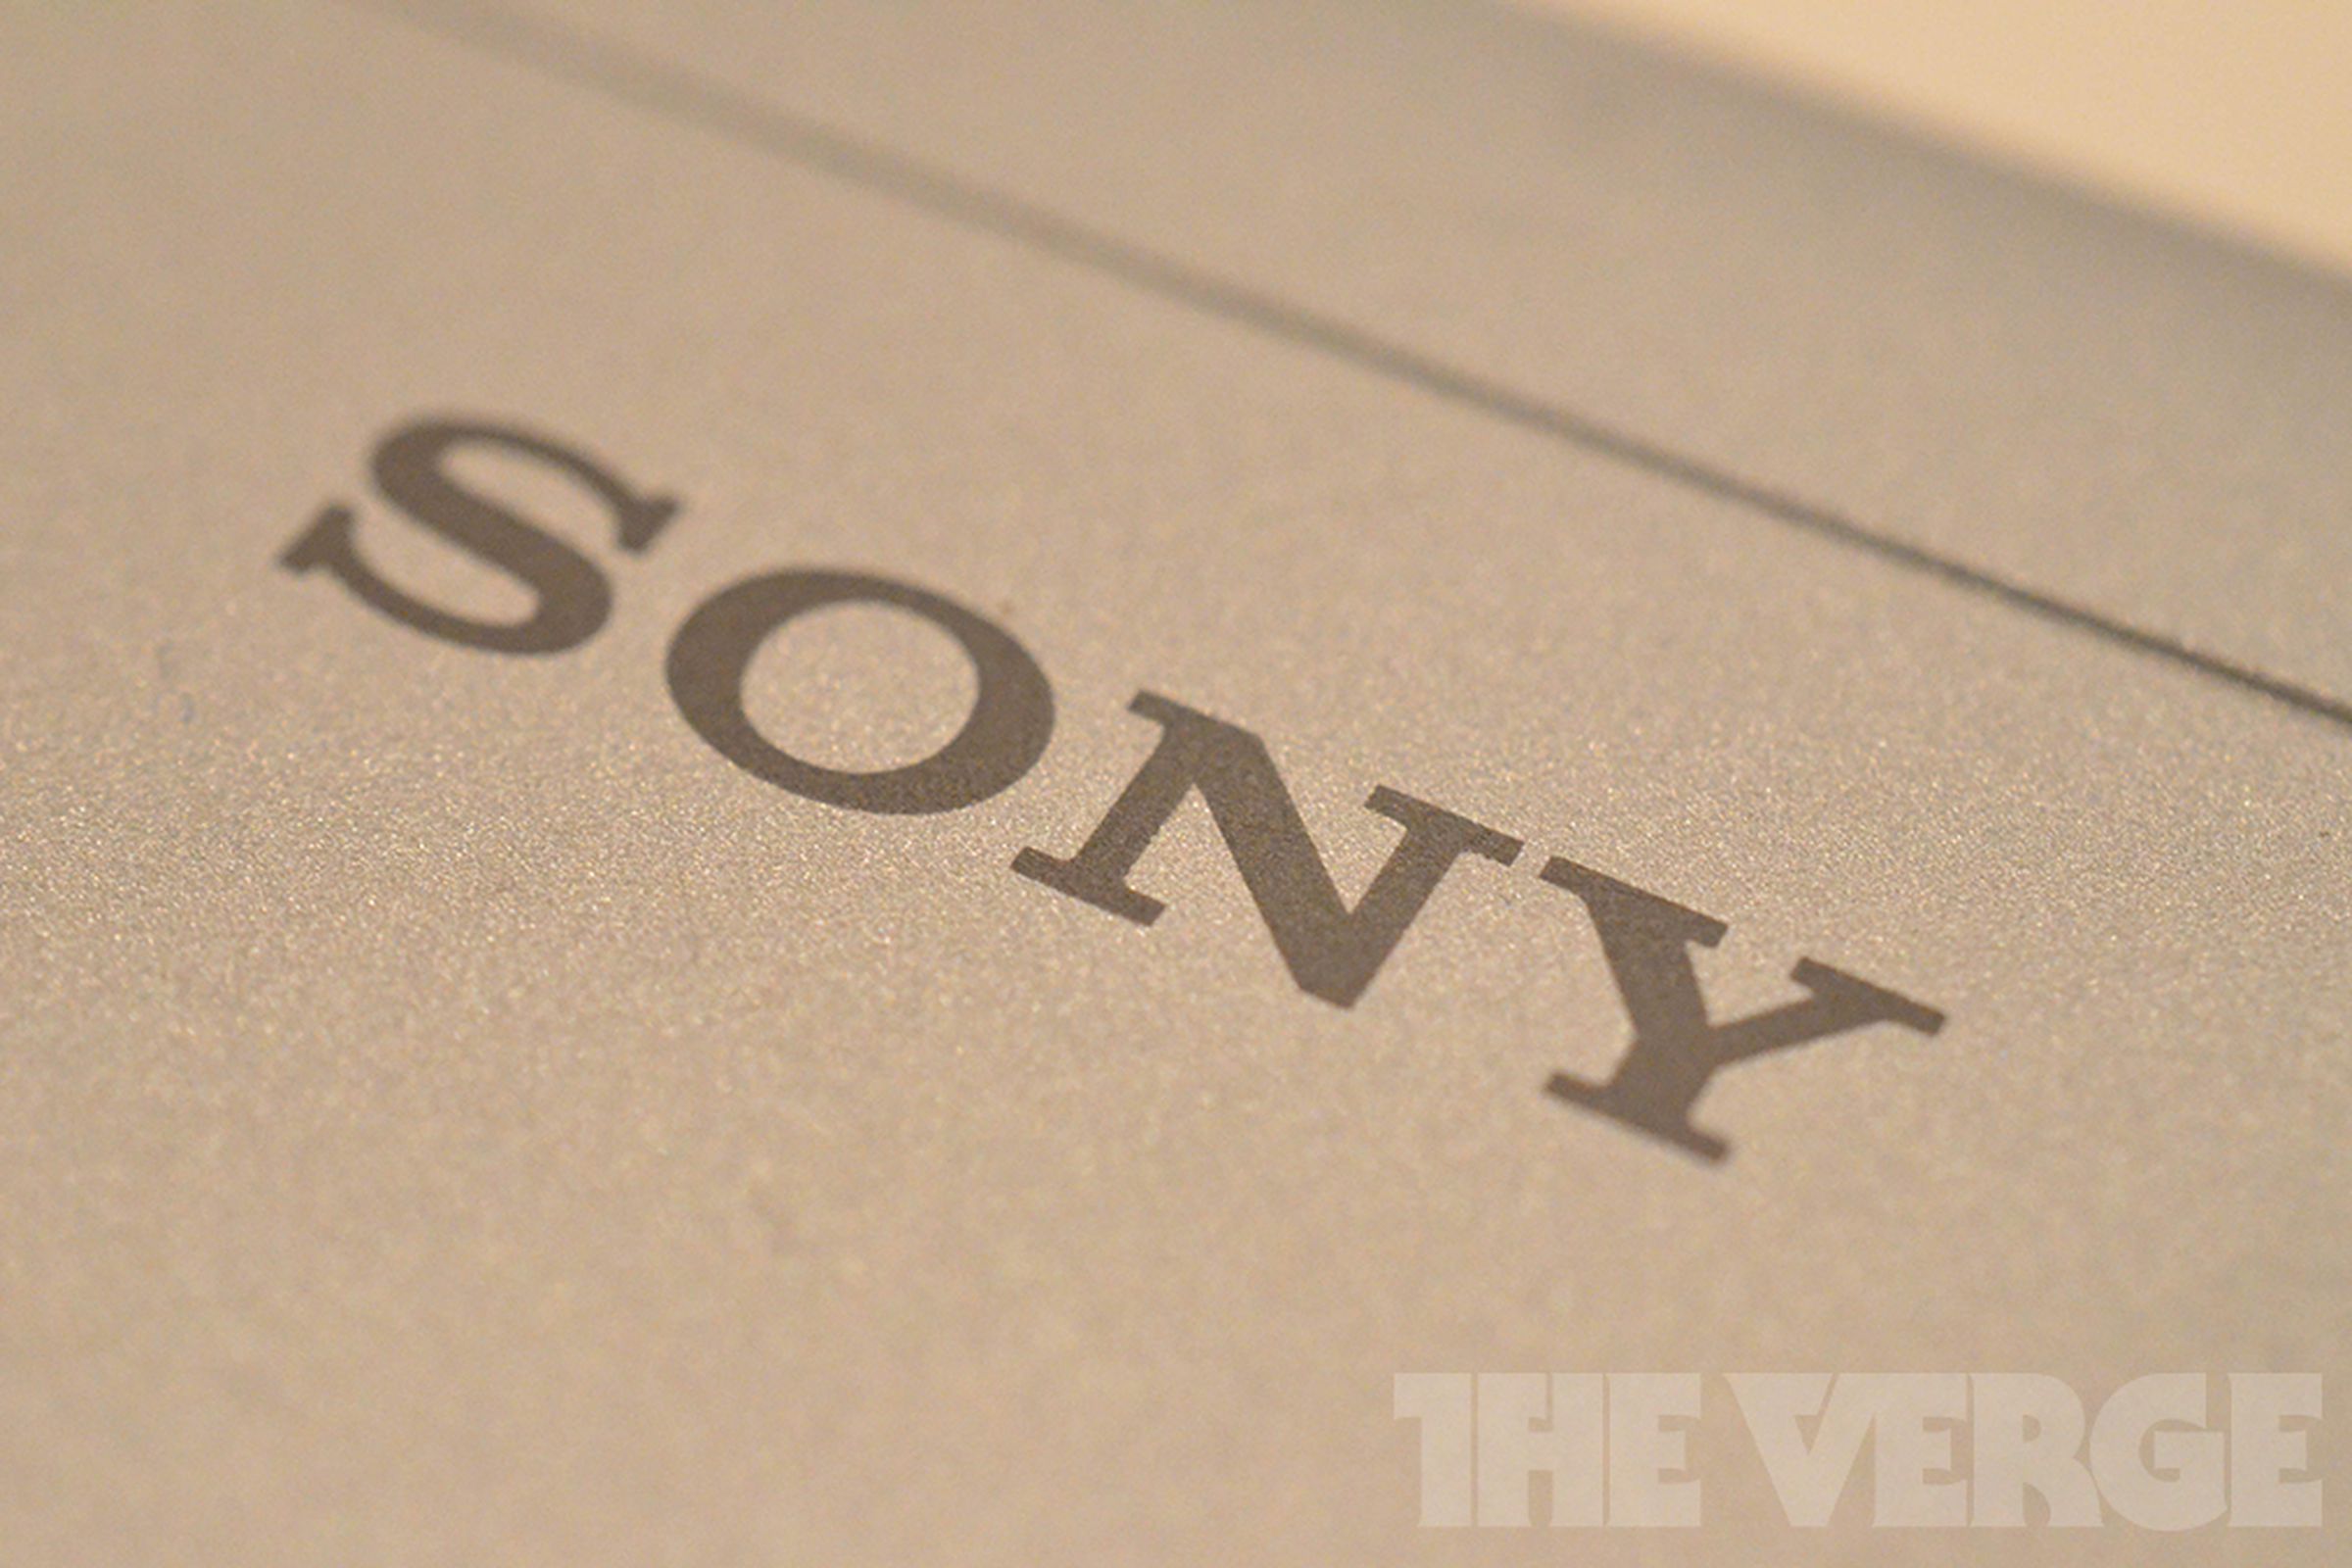 Sony laptop logo (1020)